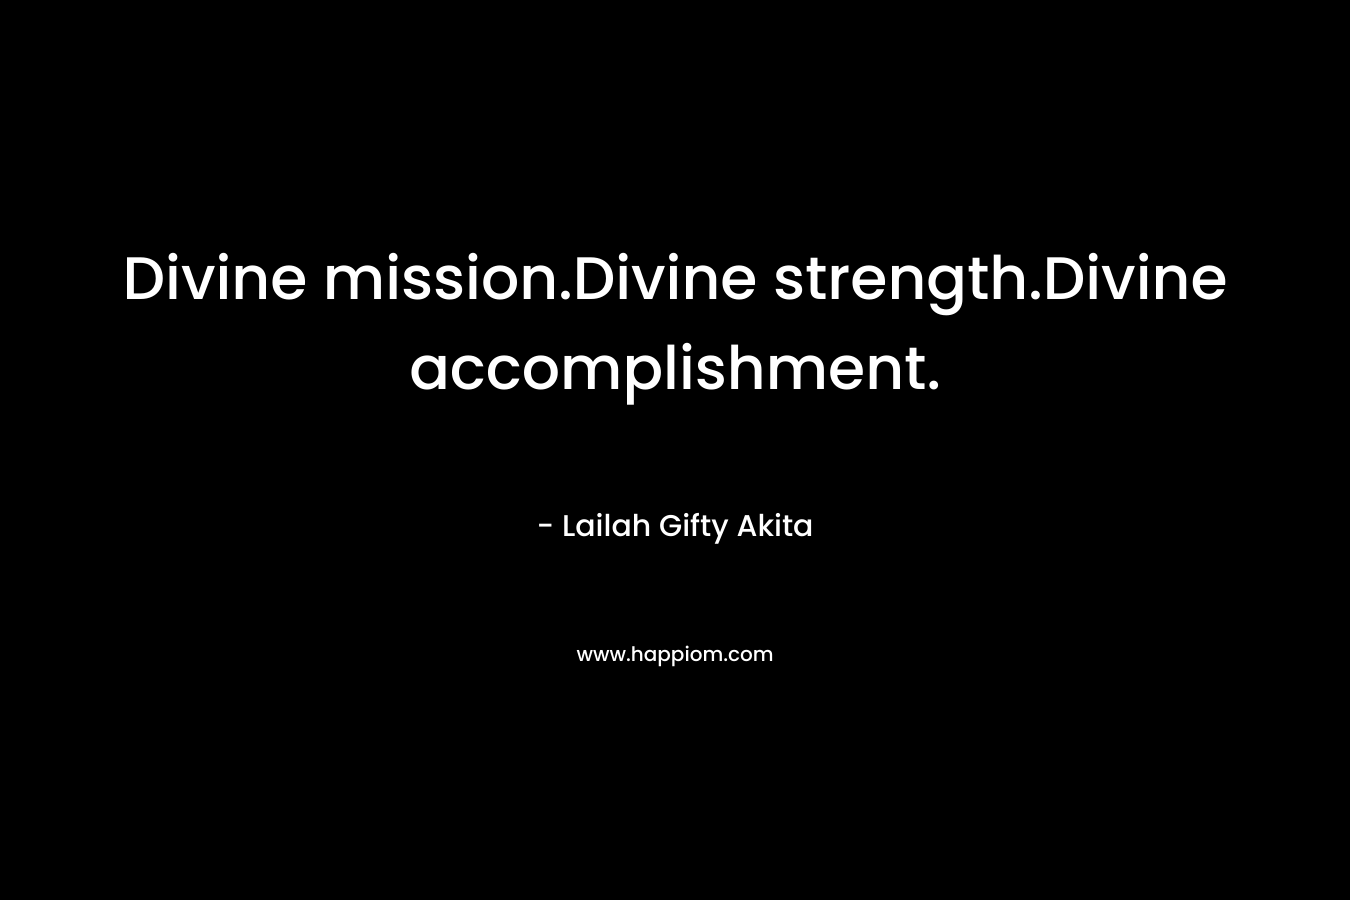 Divine mission.Divine strength.Divine accomplishment.